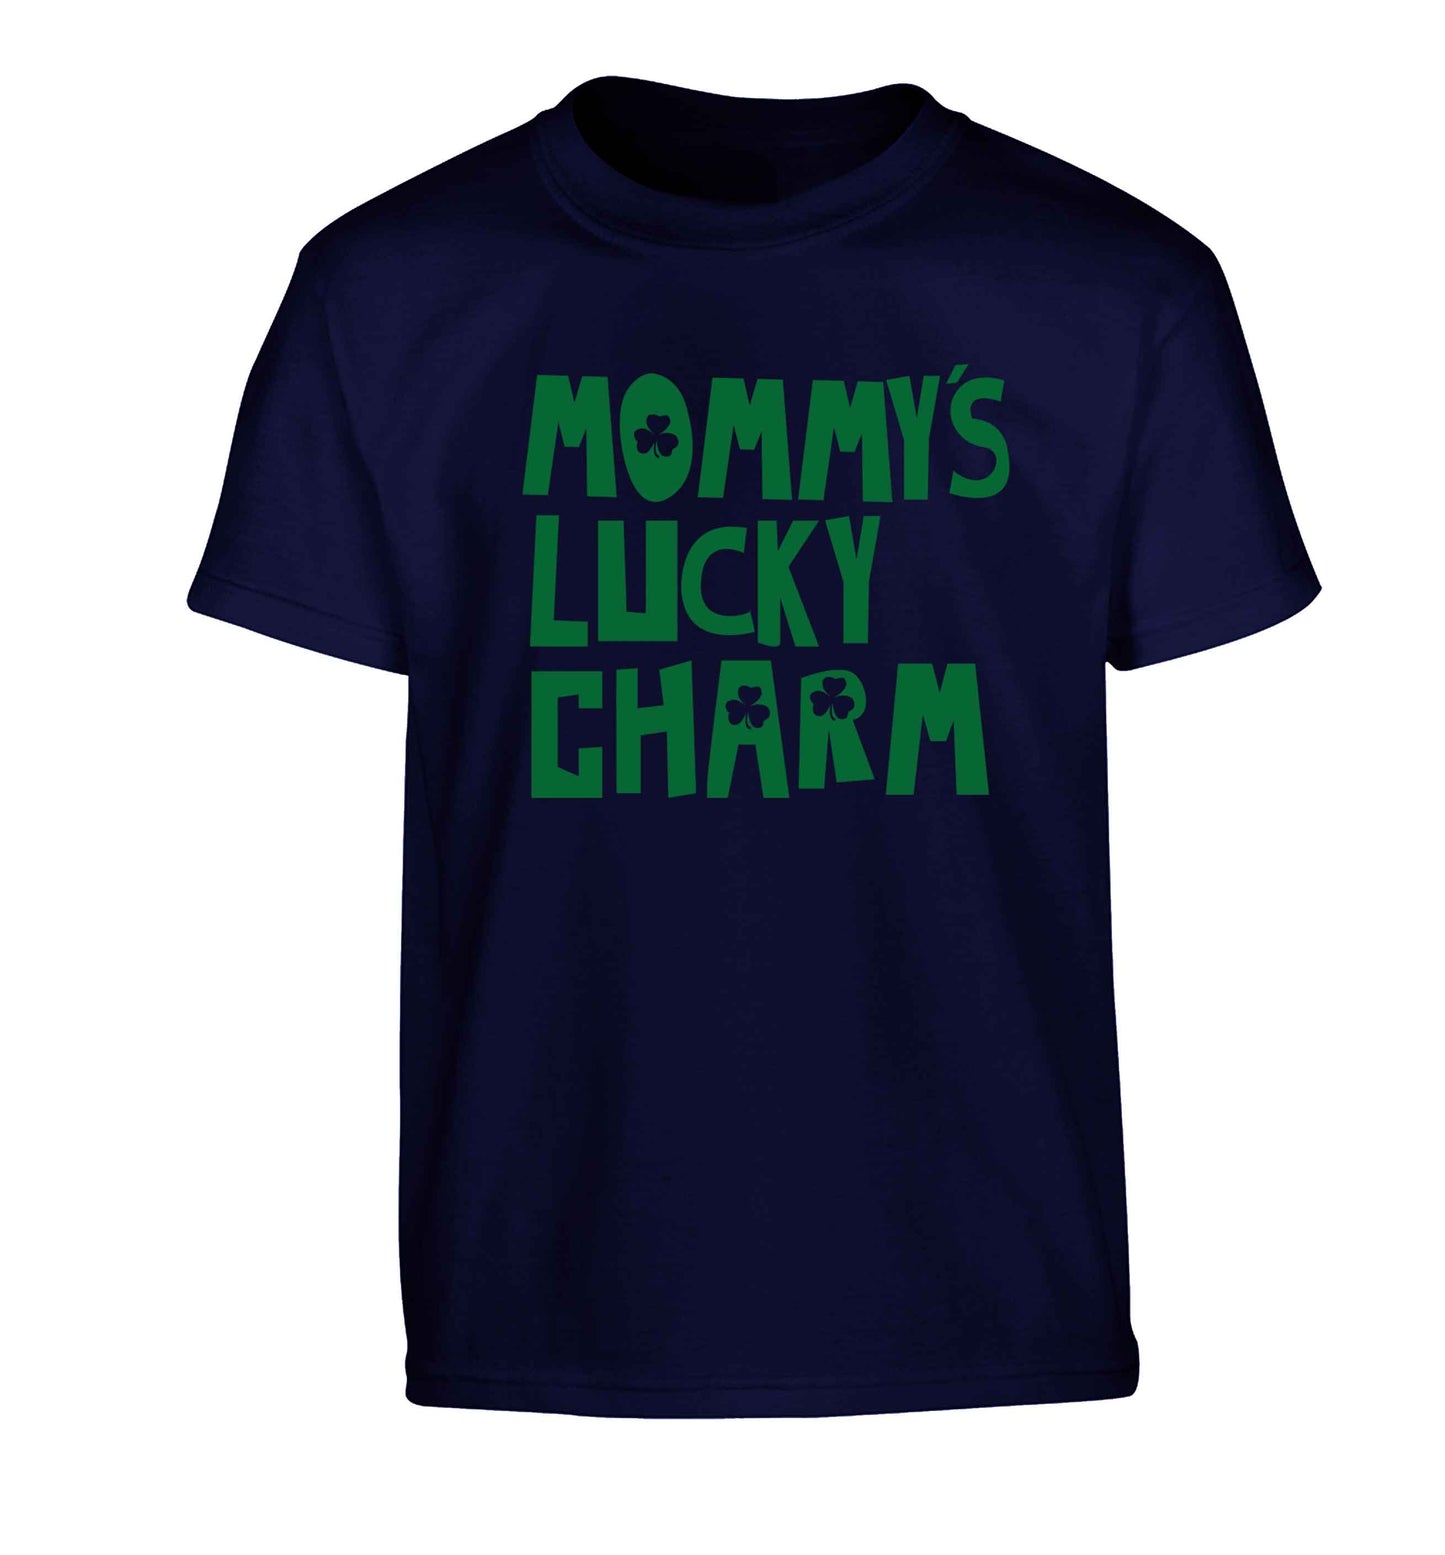 Mommy's lucky charm Children's navy Tshirt 12-13 Years